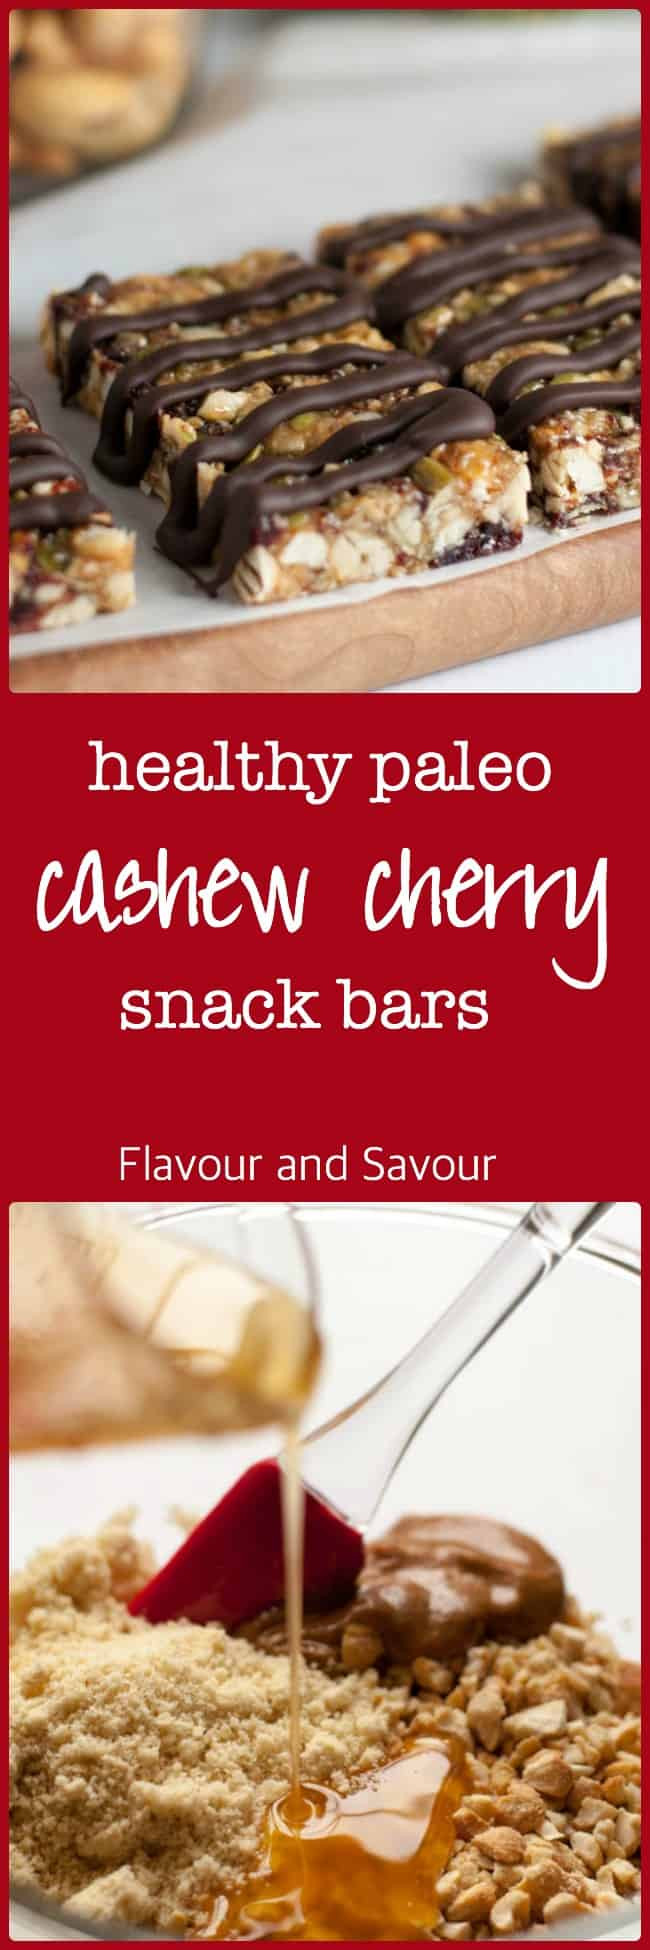 Paleo Diet Bar
 Healthy Paleo Cashew Cherry Snack Bars Flavour and Savour